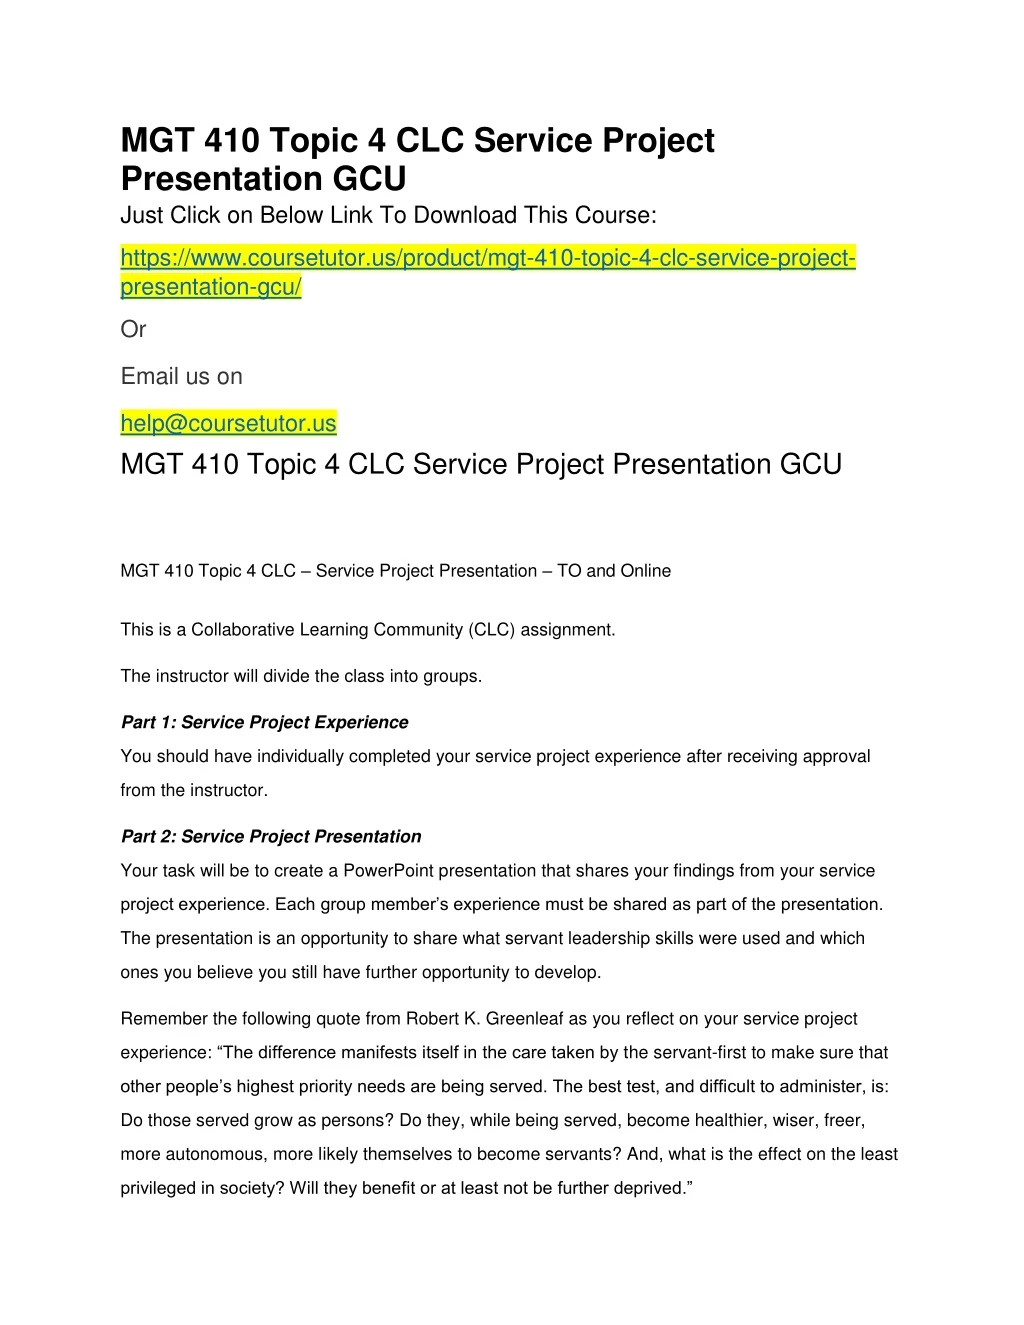 mgt 410 topic 4 clc service project presentation